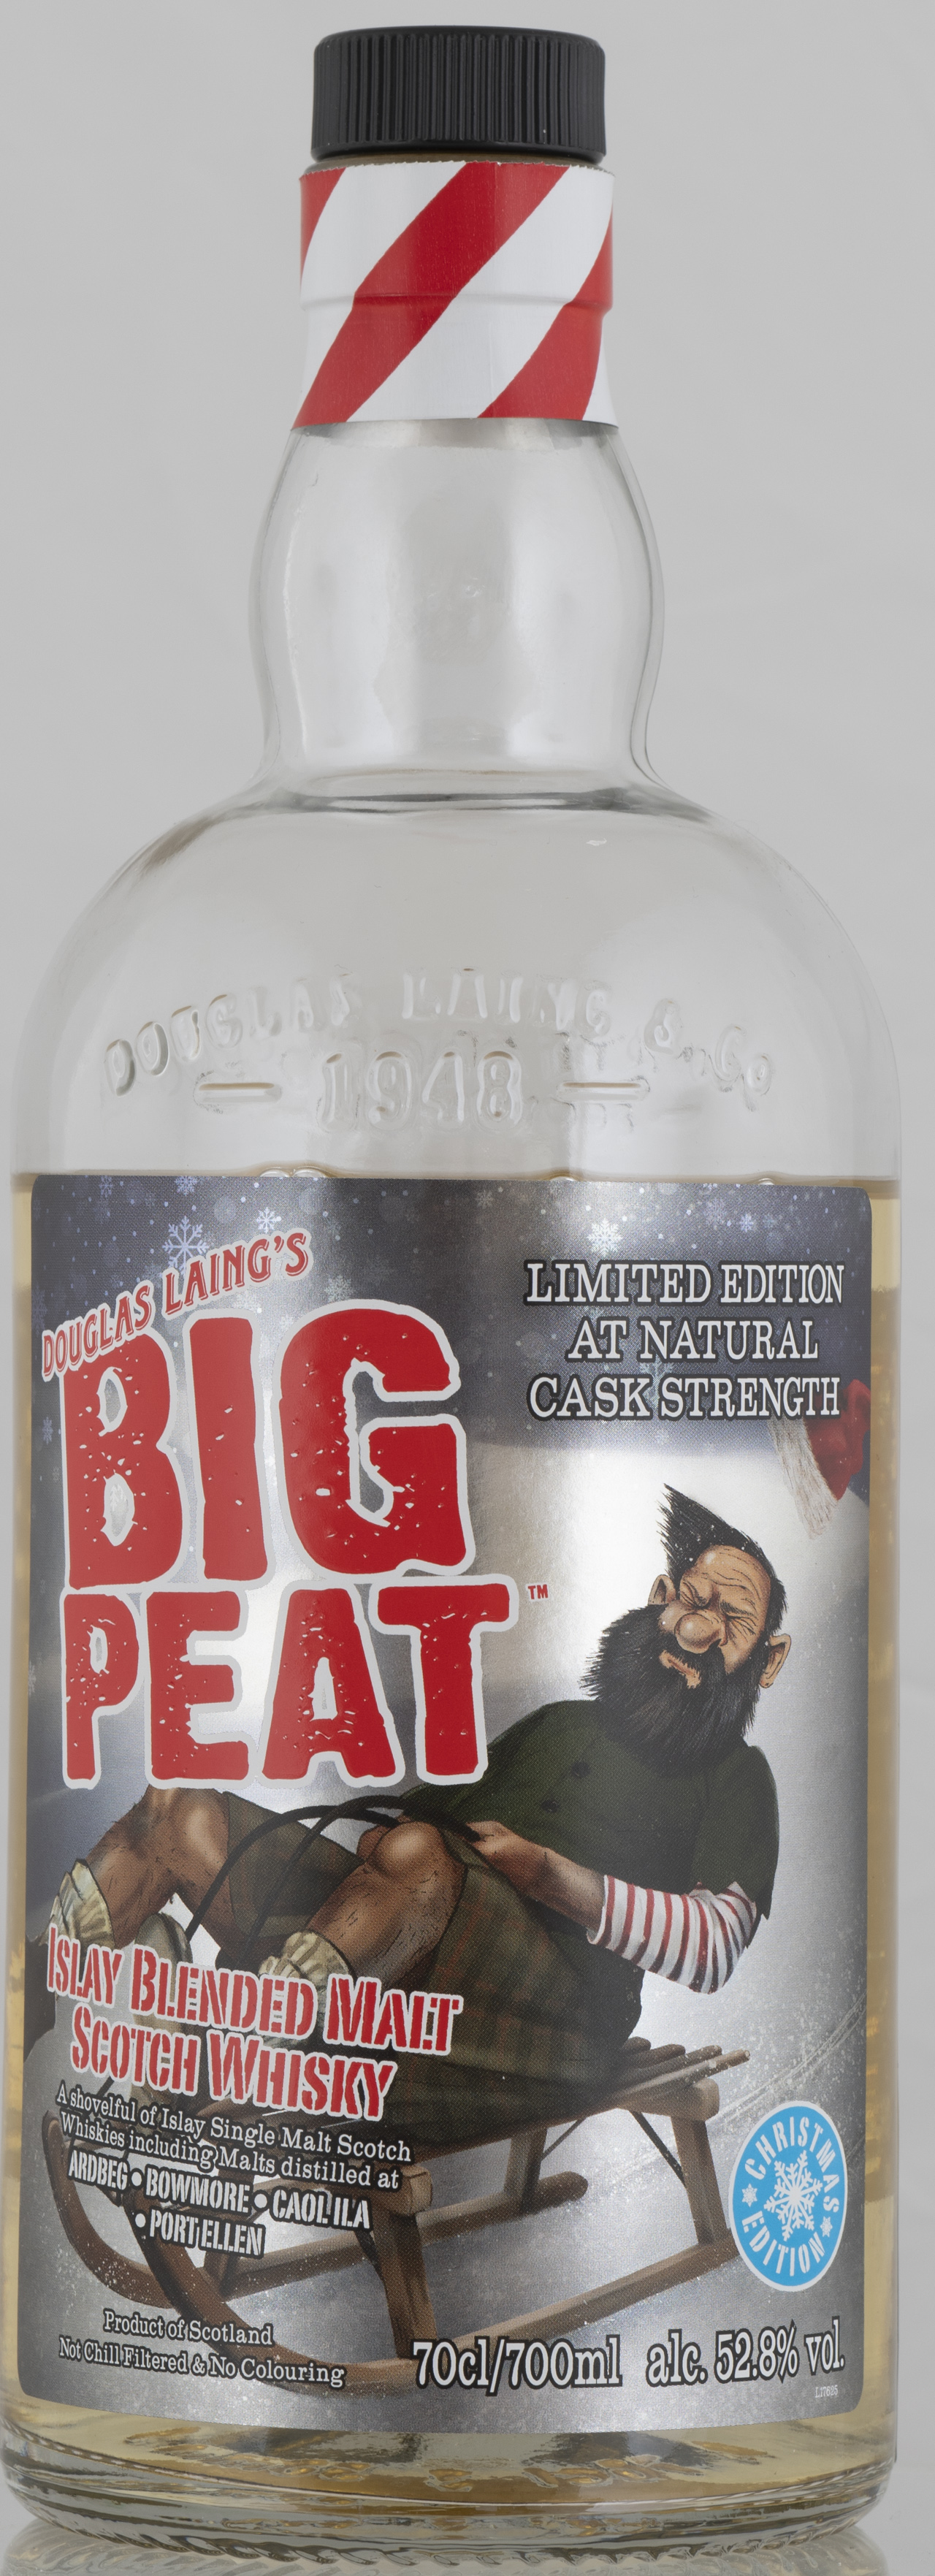 Billede: PHC_7253 - Big Peat Christmas Edition - bottle front.jpg